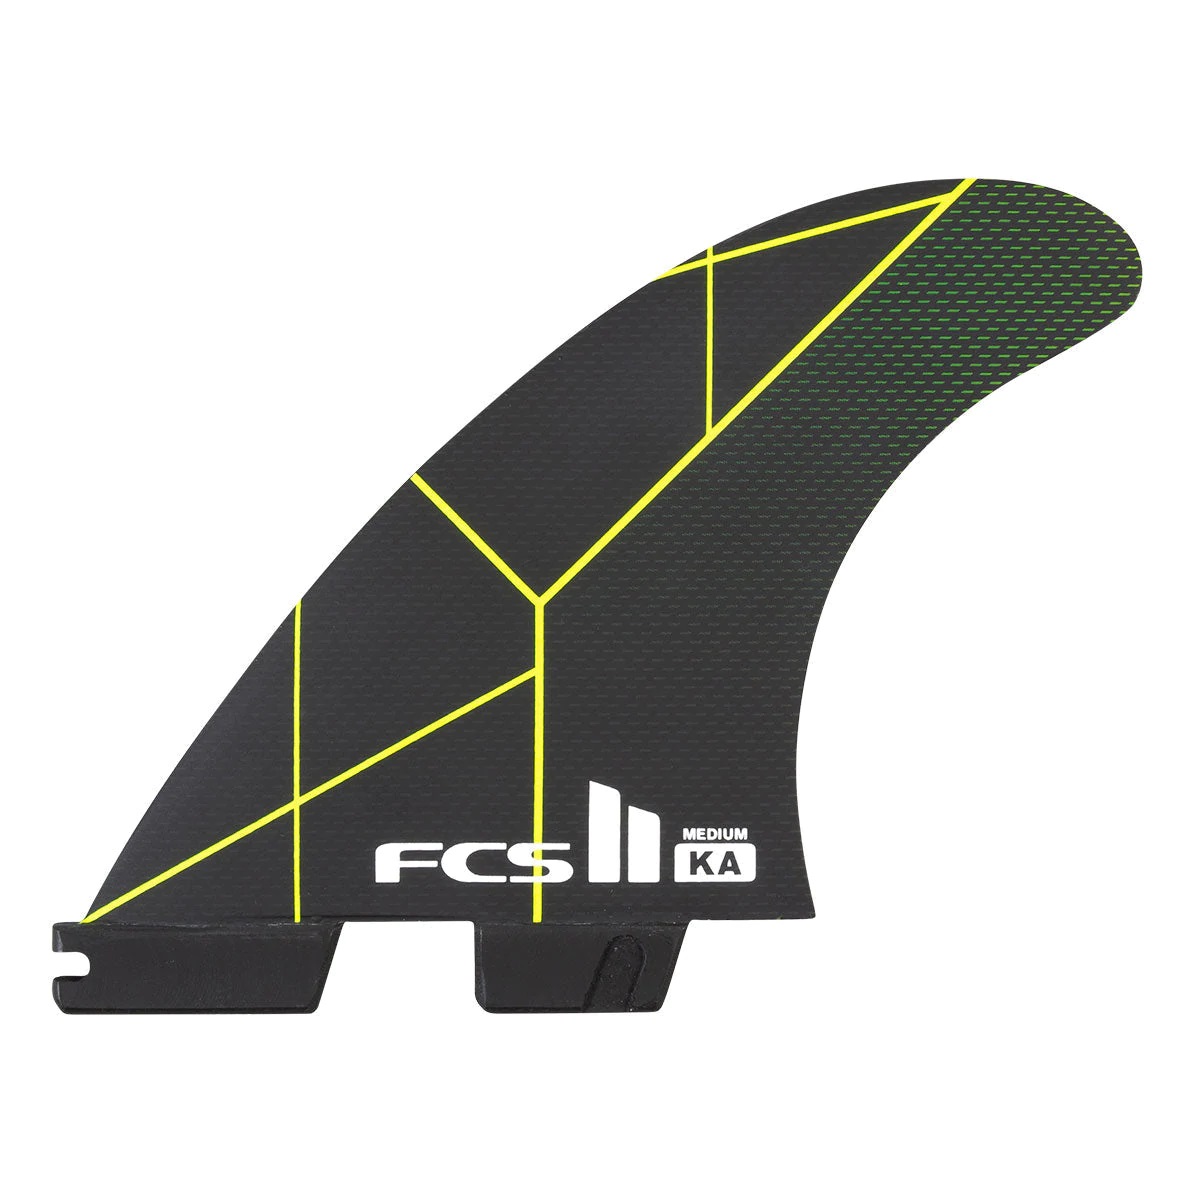 FCS2 フィン エフシーエス2 KA トライフィン WHT/GRY KOLOHE ANDINO TRI FINS 3サイズ ショートボード用フィン 3本セット Performance Core